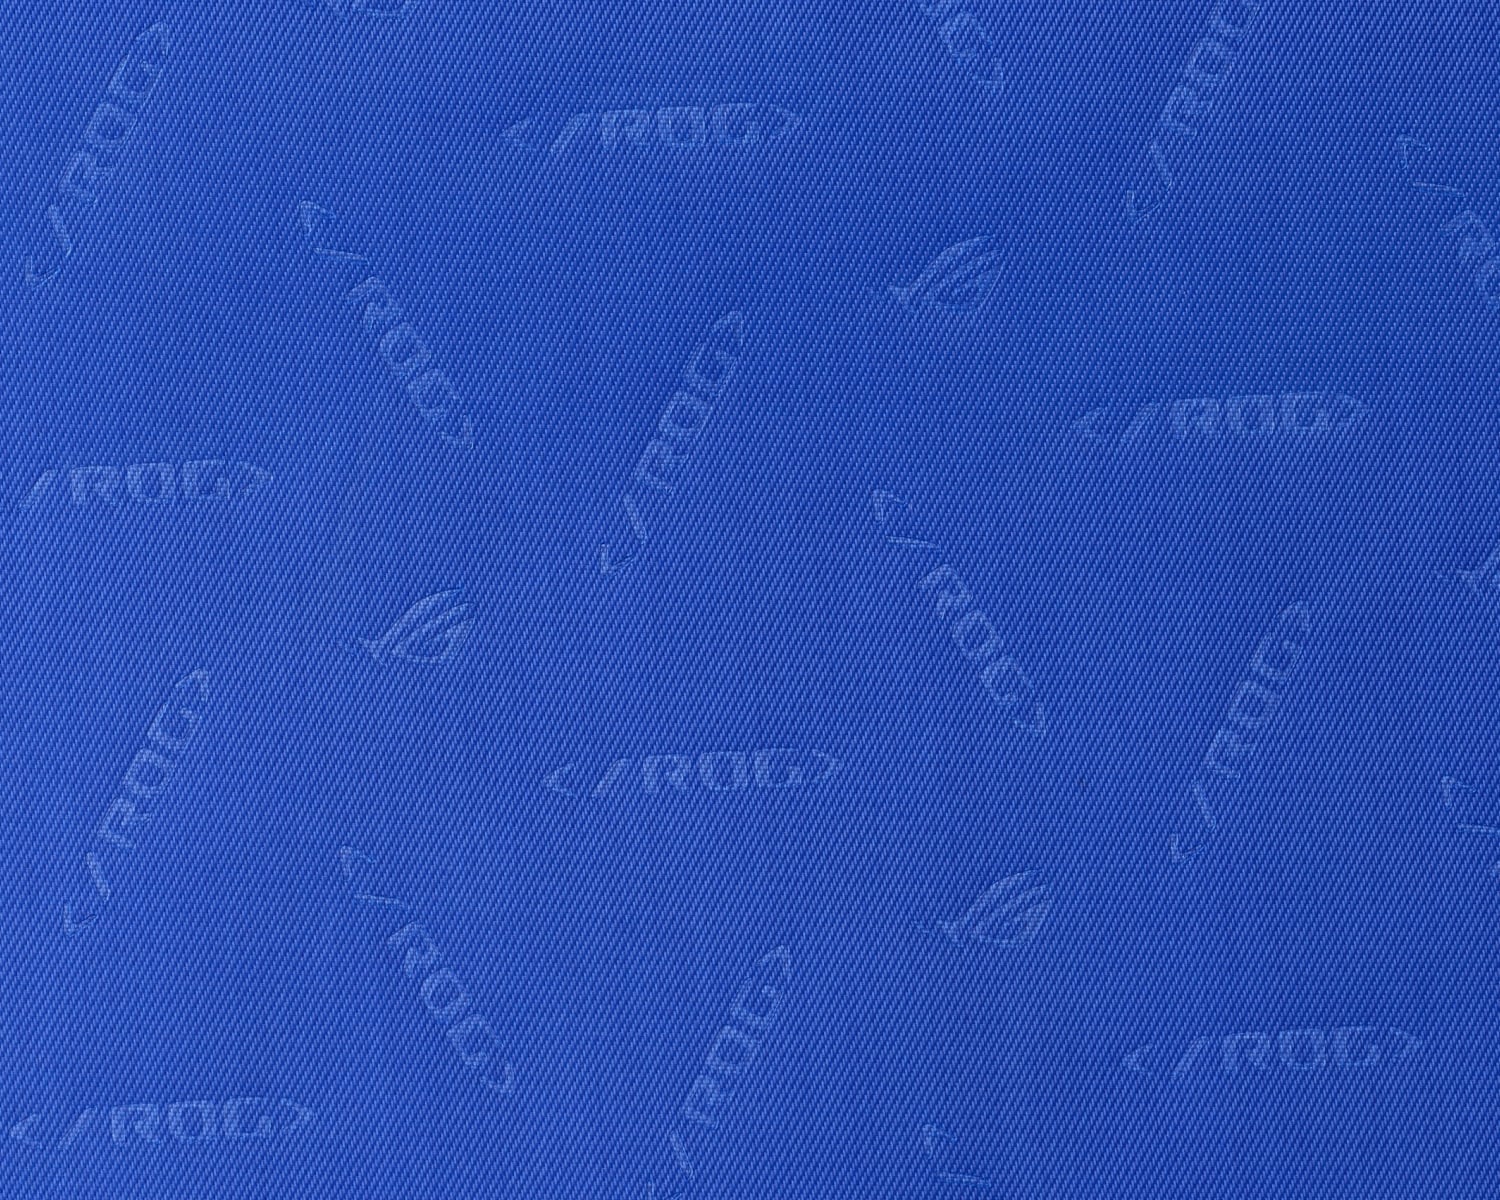 Extreme close-up of the stitching inside the ROG SLASH Sling Bag 2.0